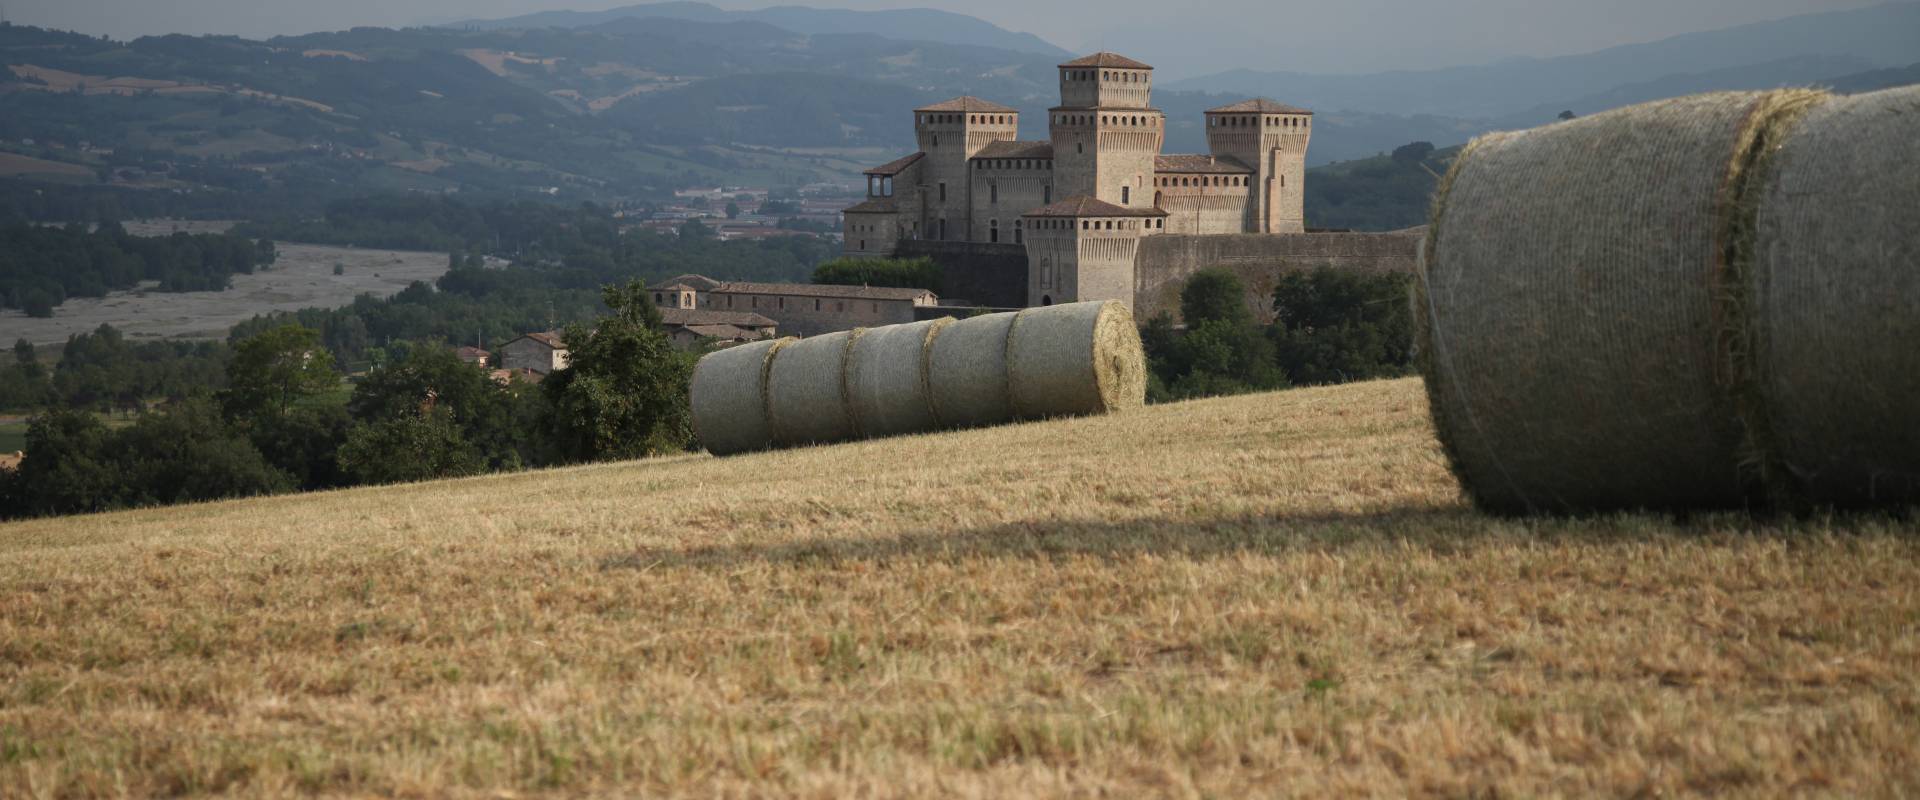 Castello di Torrechiara, estate photo by Sebastian Corradi